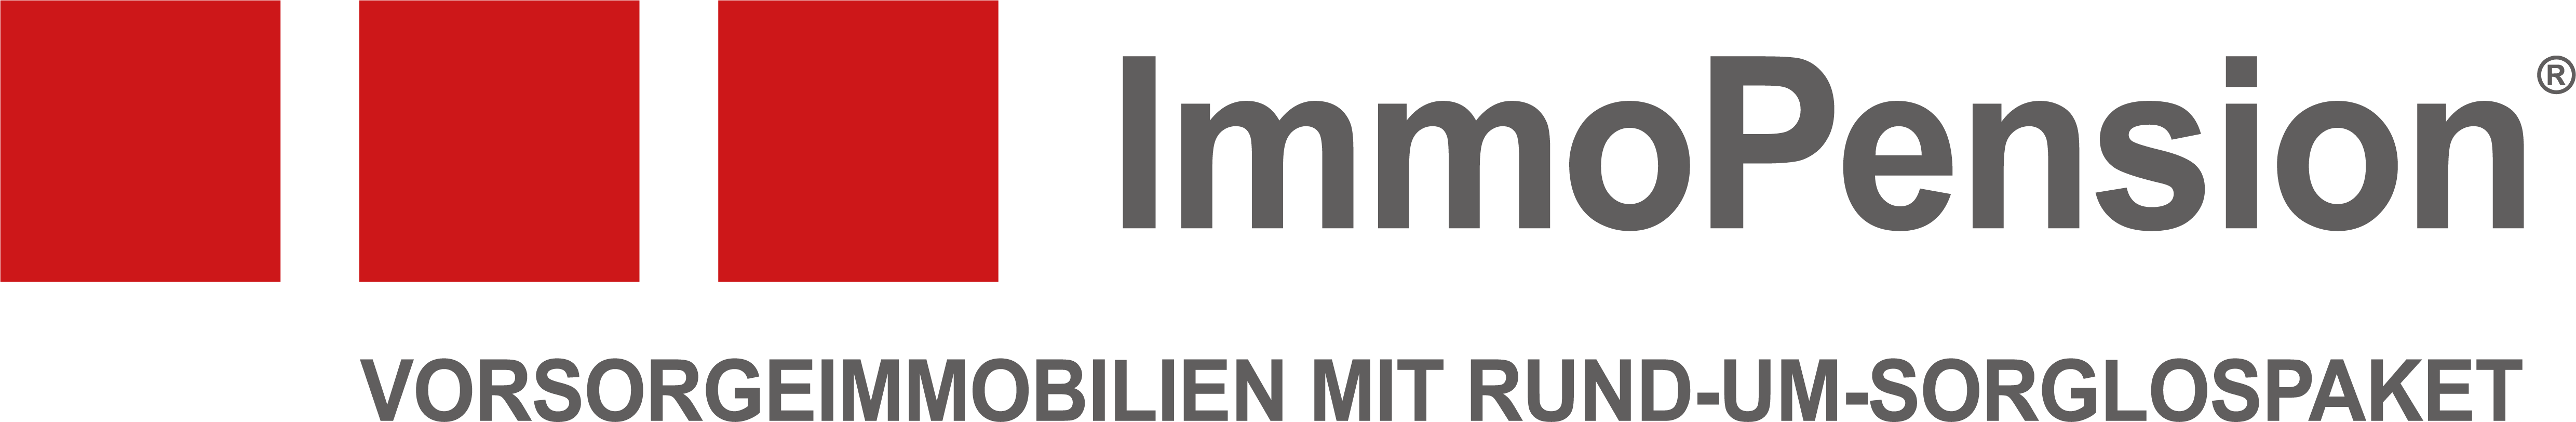 Hauptsponsor ImmoPension_Logo